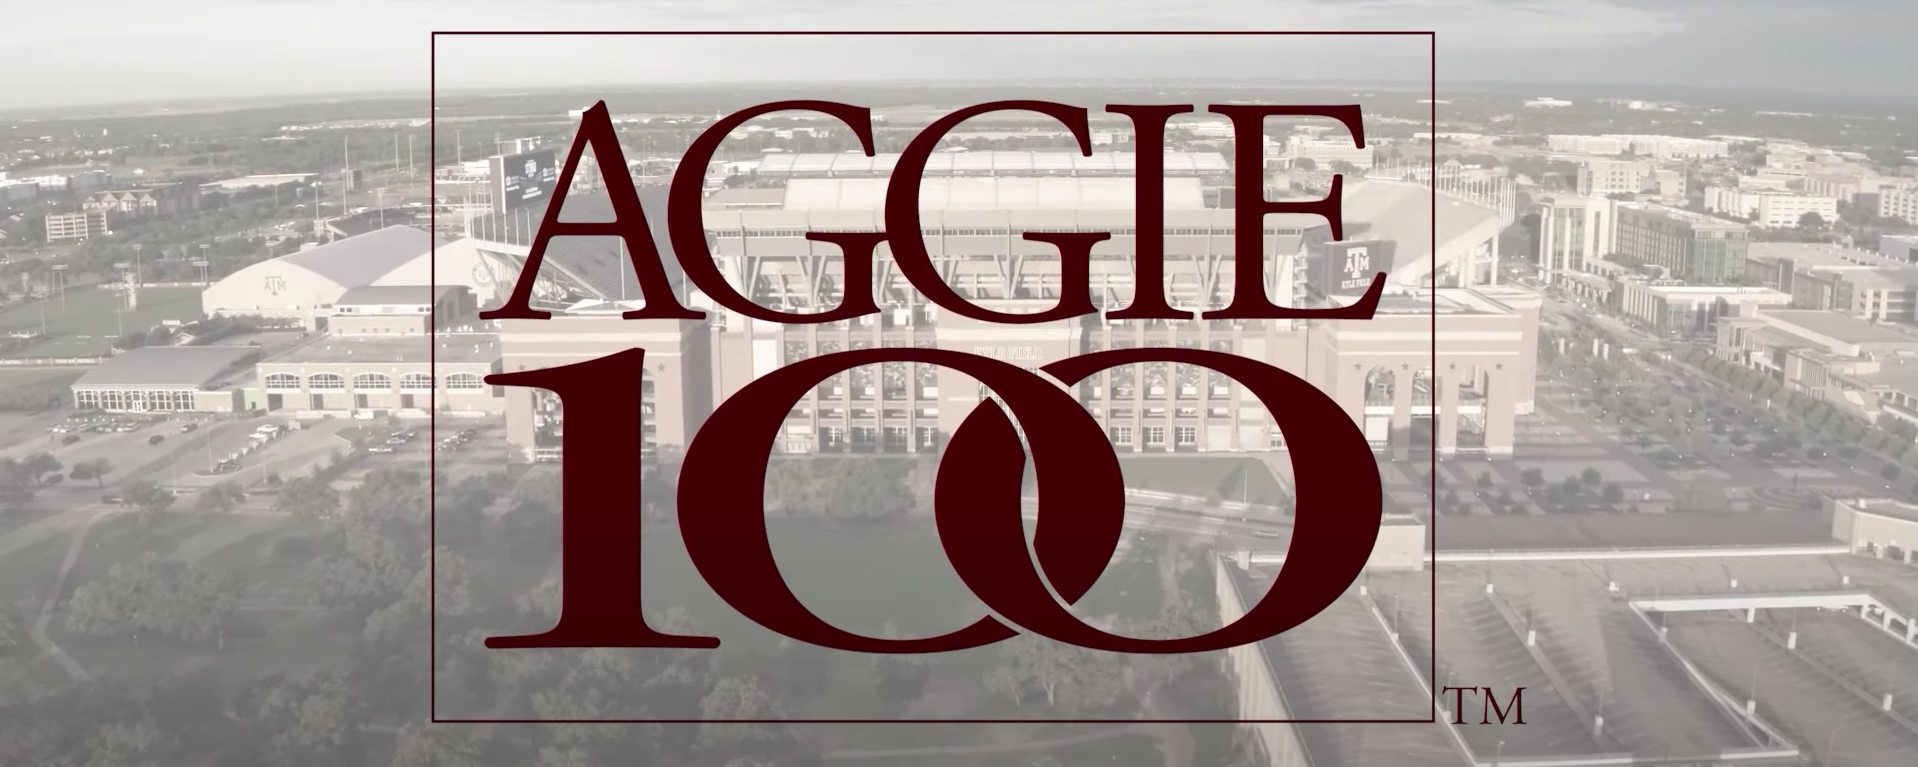 Aggie 100 logo